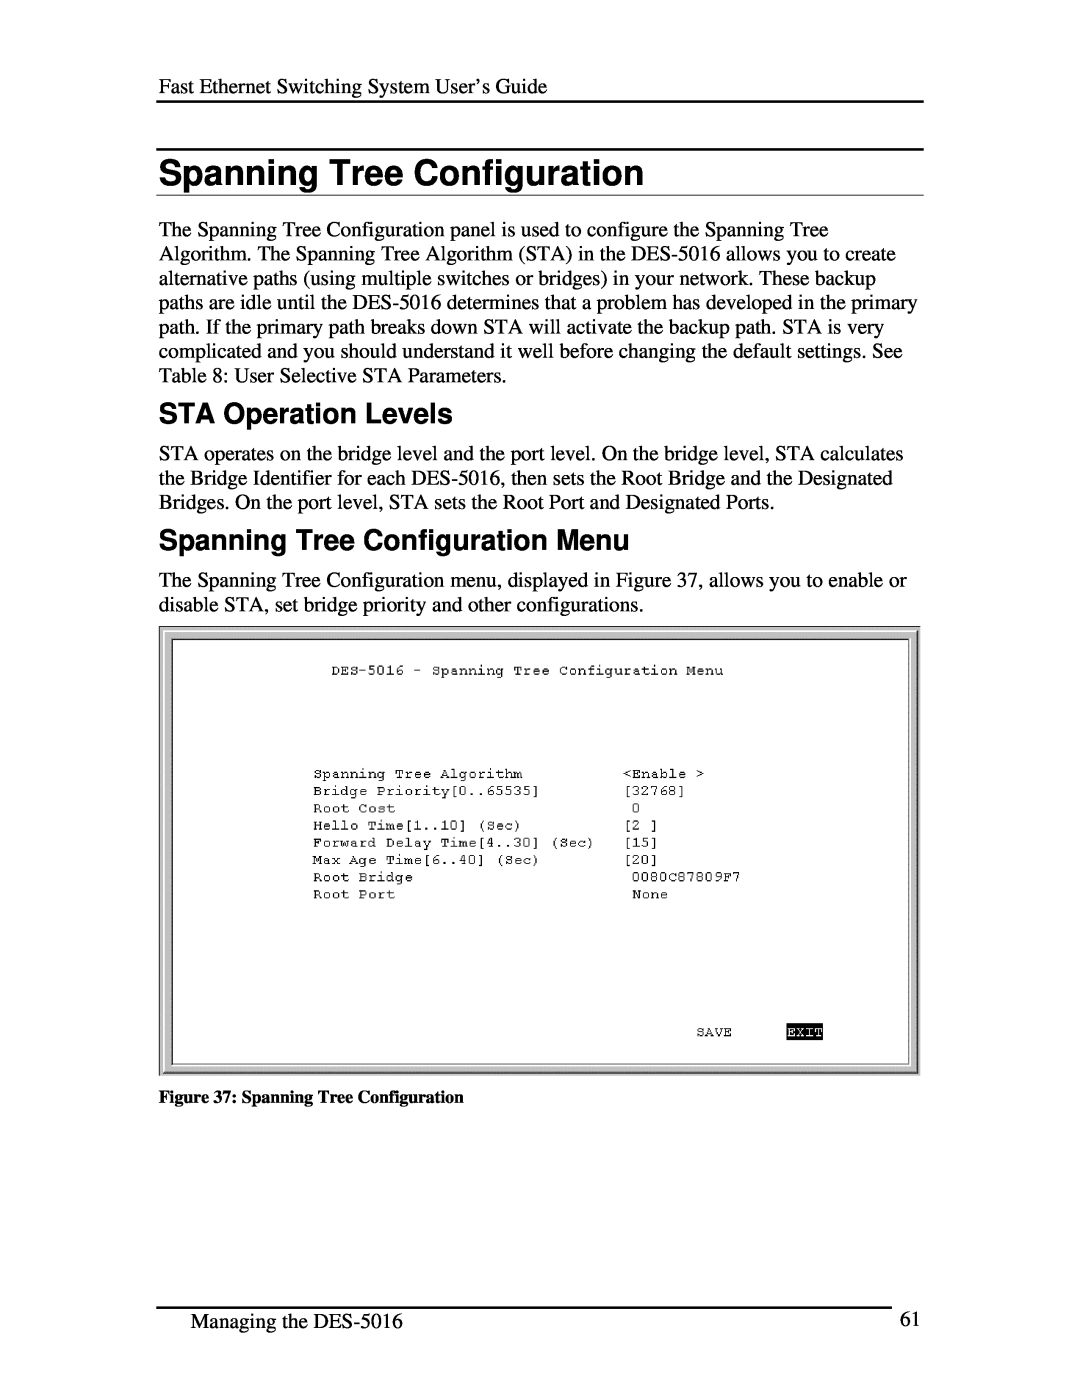 D-Link DES-5016 manual STA Operation Levels, Spanning Tree Configuration Menu 